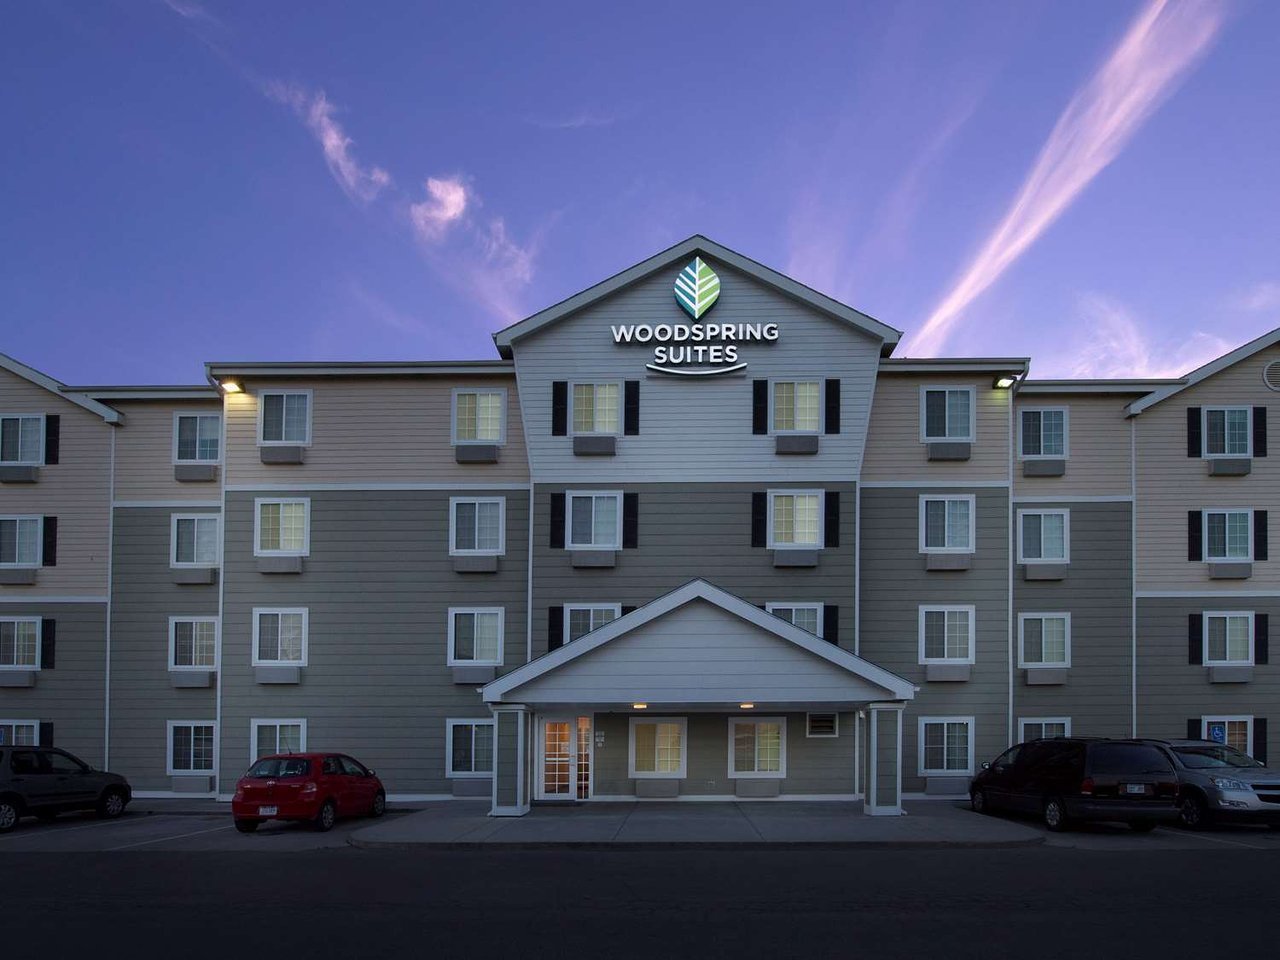 Photo of WoodSpring Suites Junction City, Junction City, KS